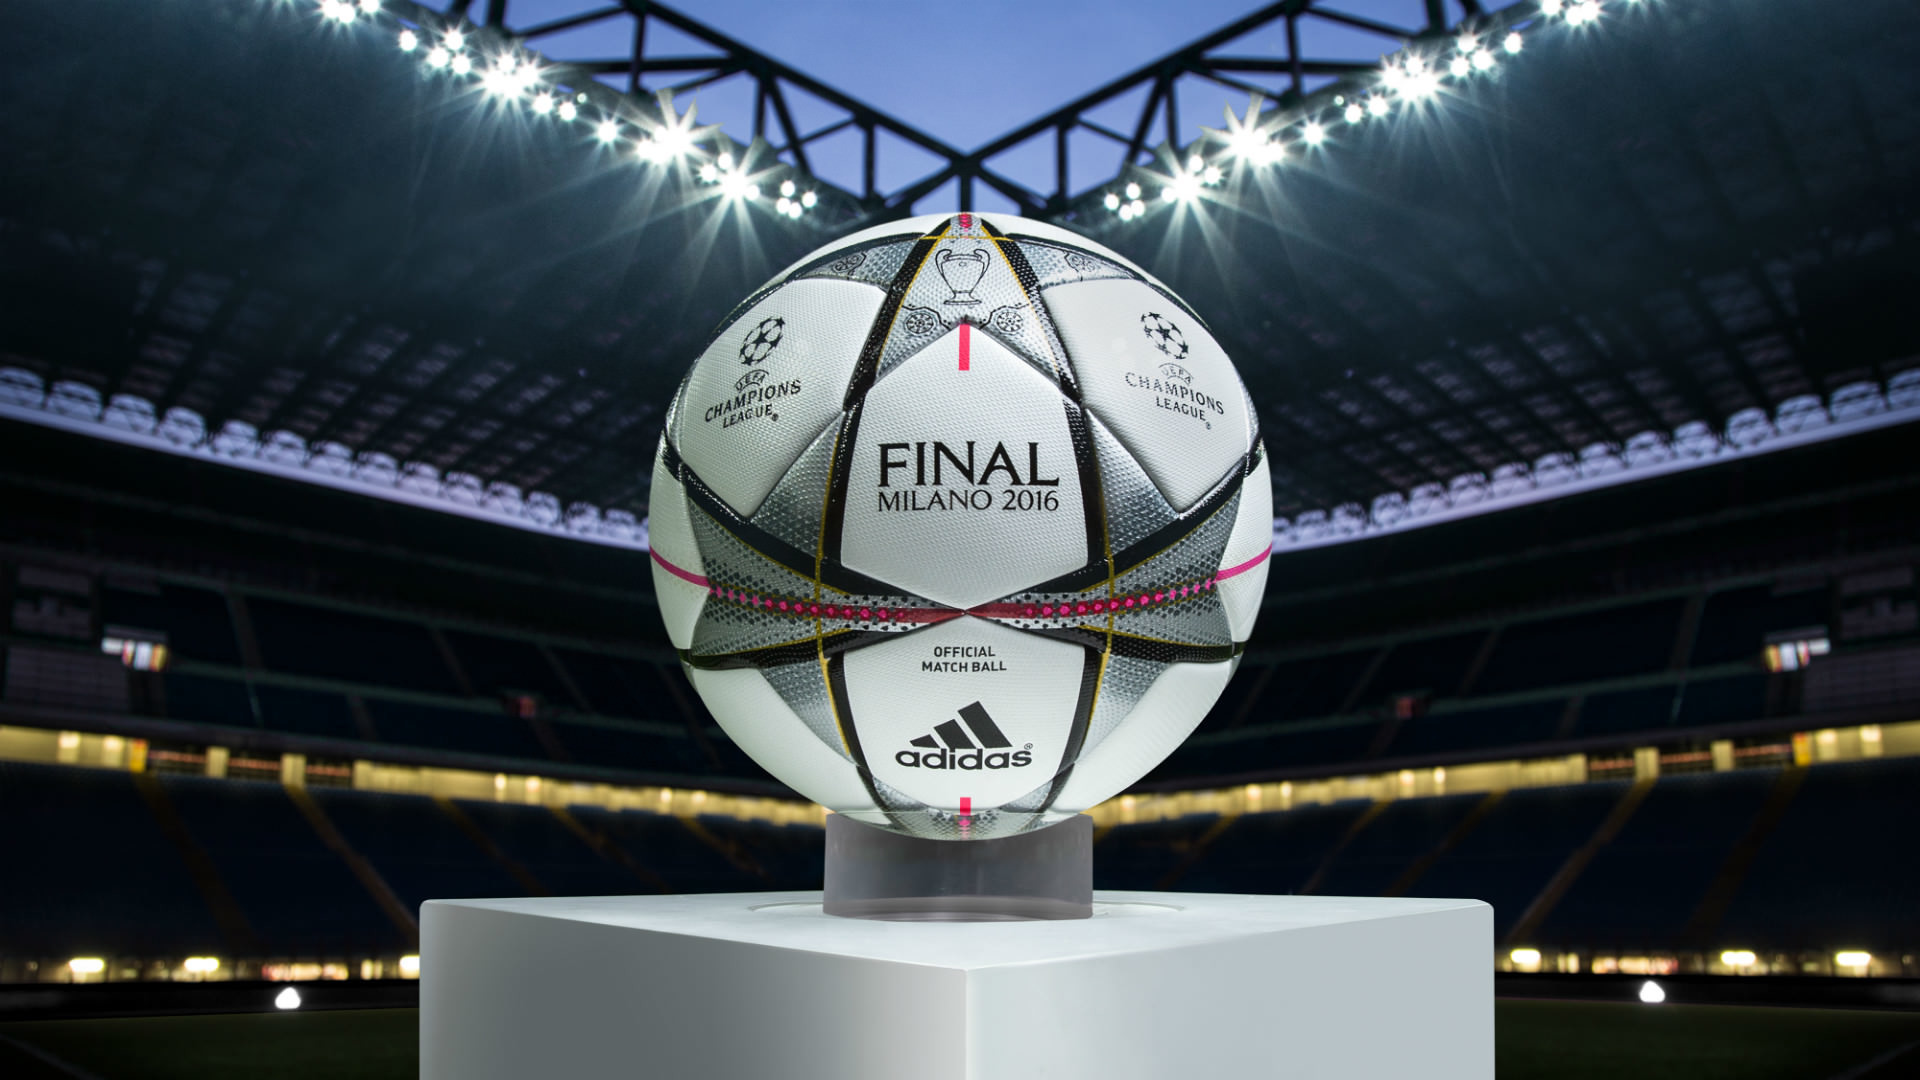 1920x1080 Champions League Final 2016 Milano Wallpaper